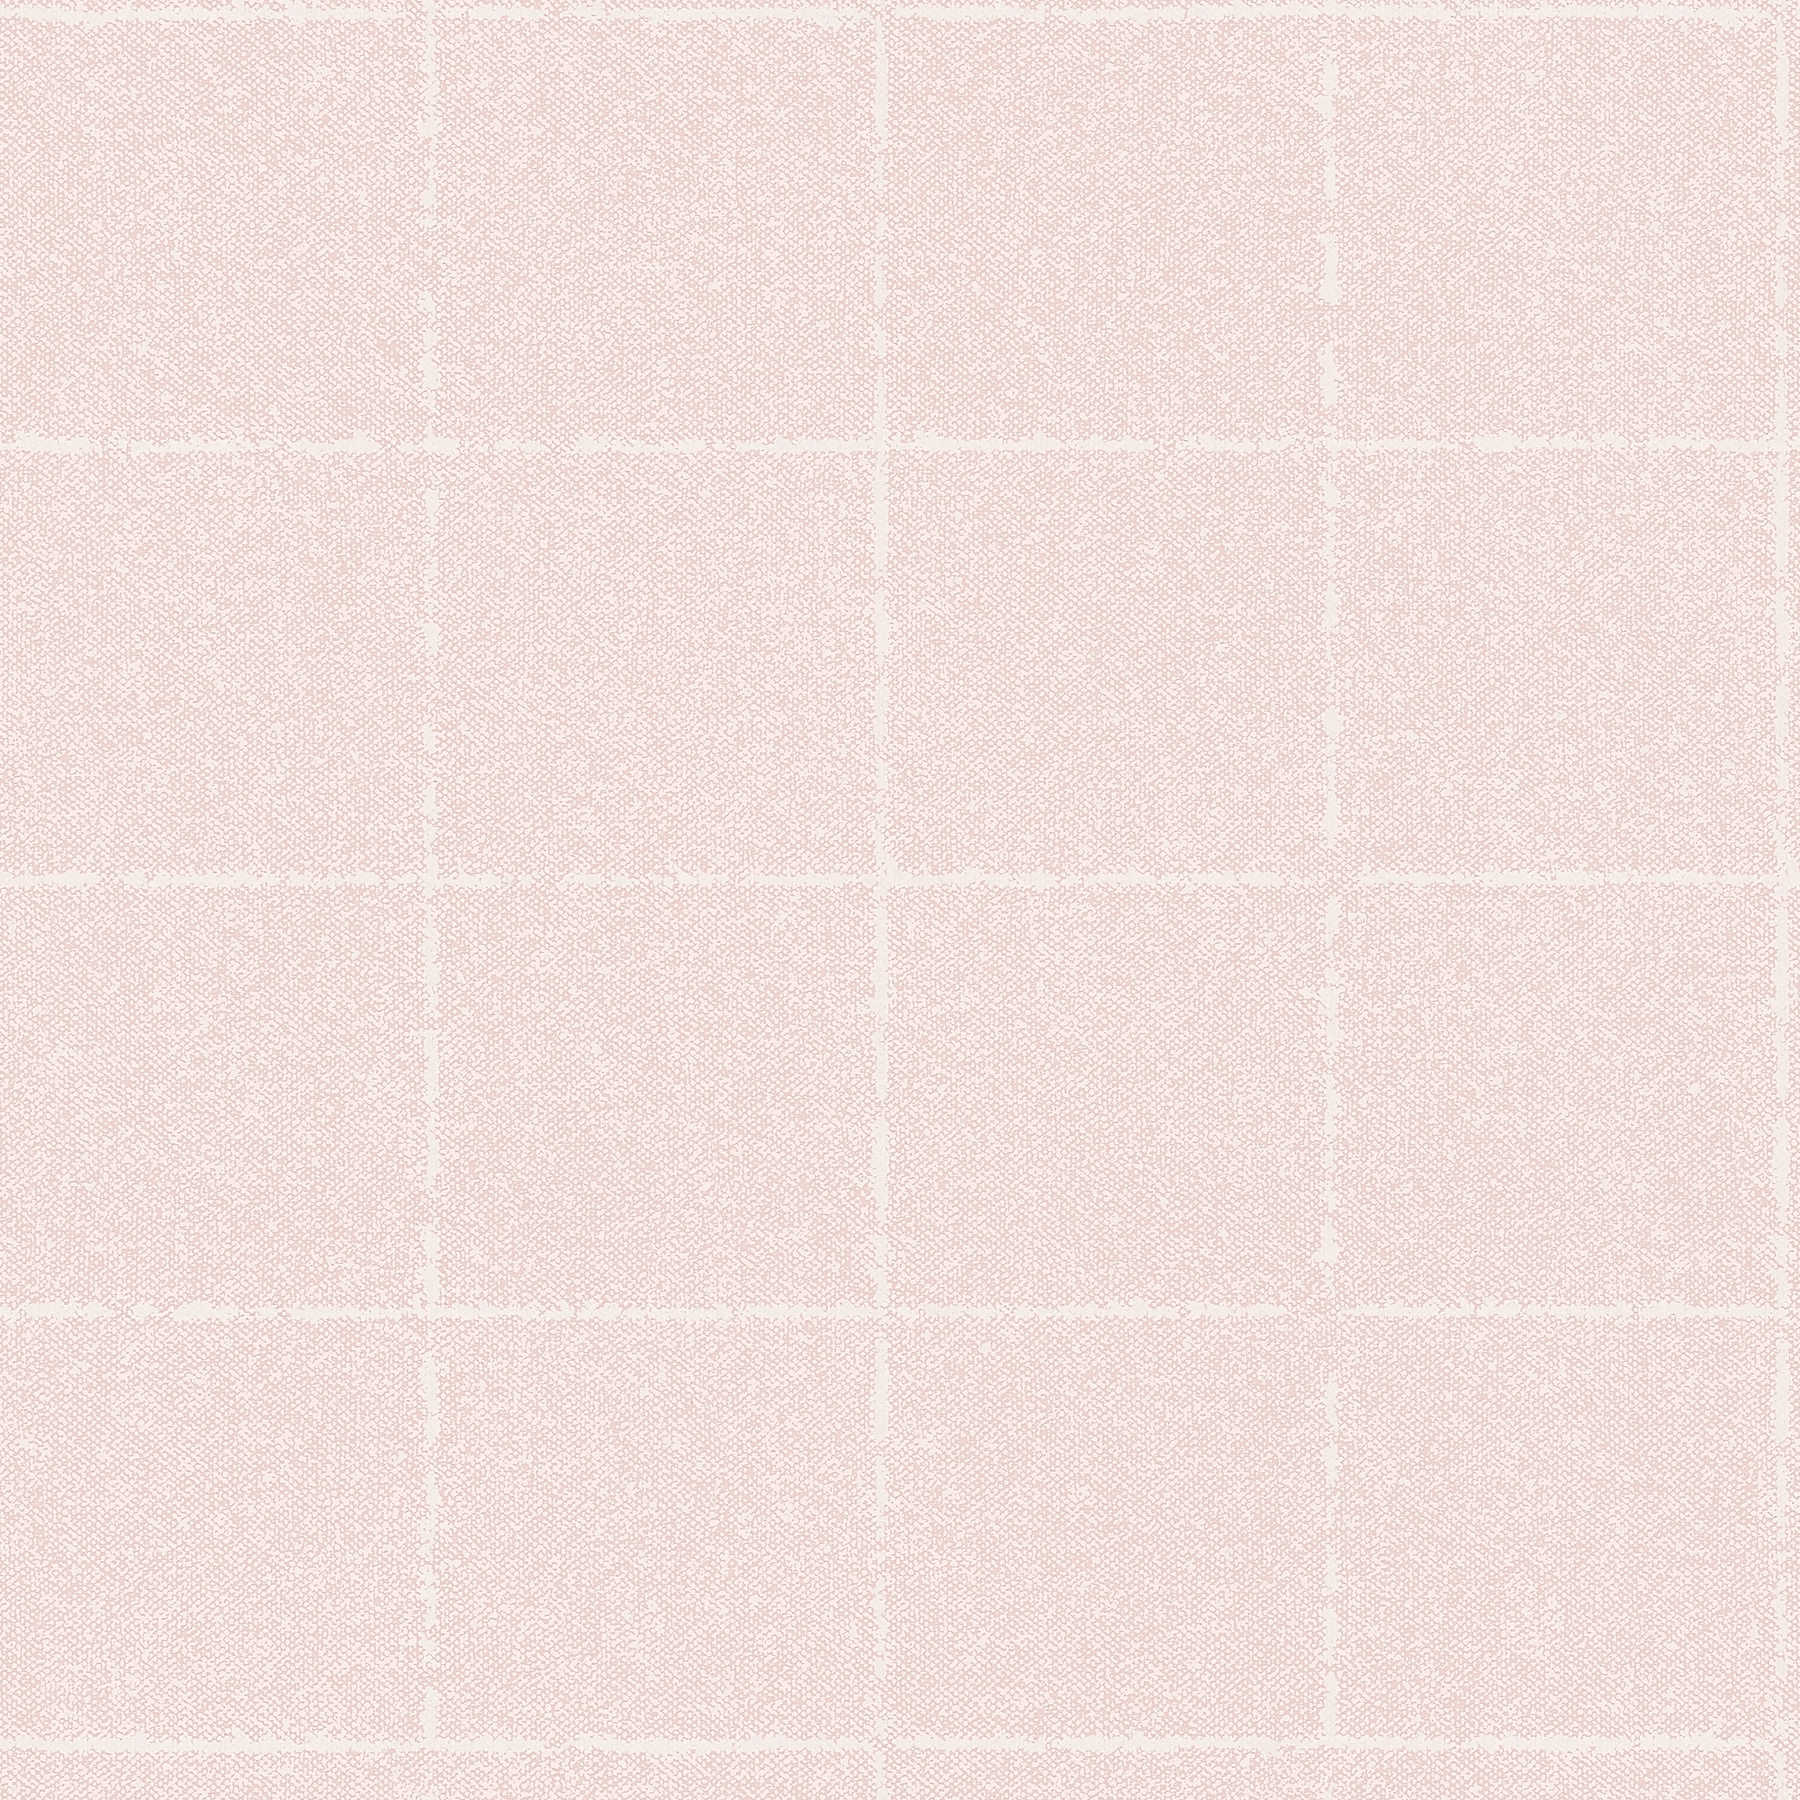 Textile optic checkered wallpaper, textured - pink, white, cream
